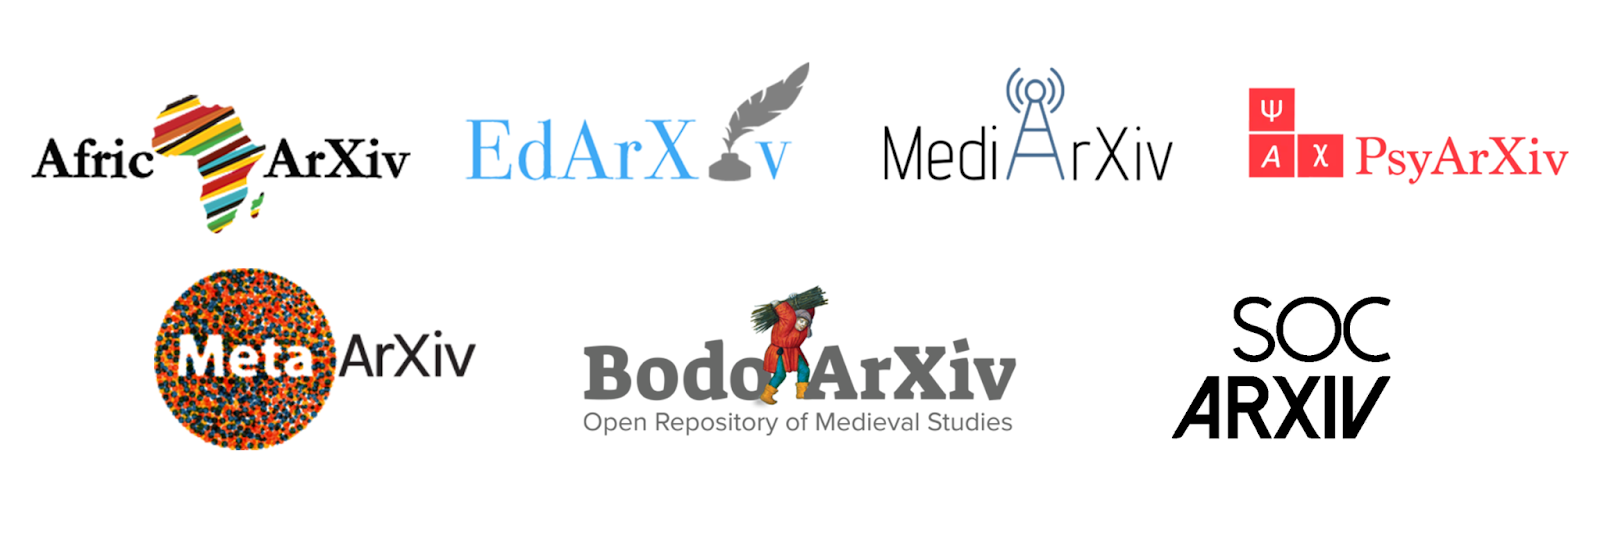 Image with logos from the preprint coalition: AfricArXiv, EdArXiv, MediArXiv, PsyArXiv, MetaArXiv, BodoArXiv, SocArXiv